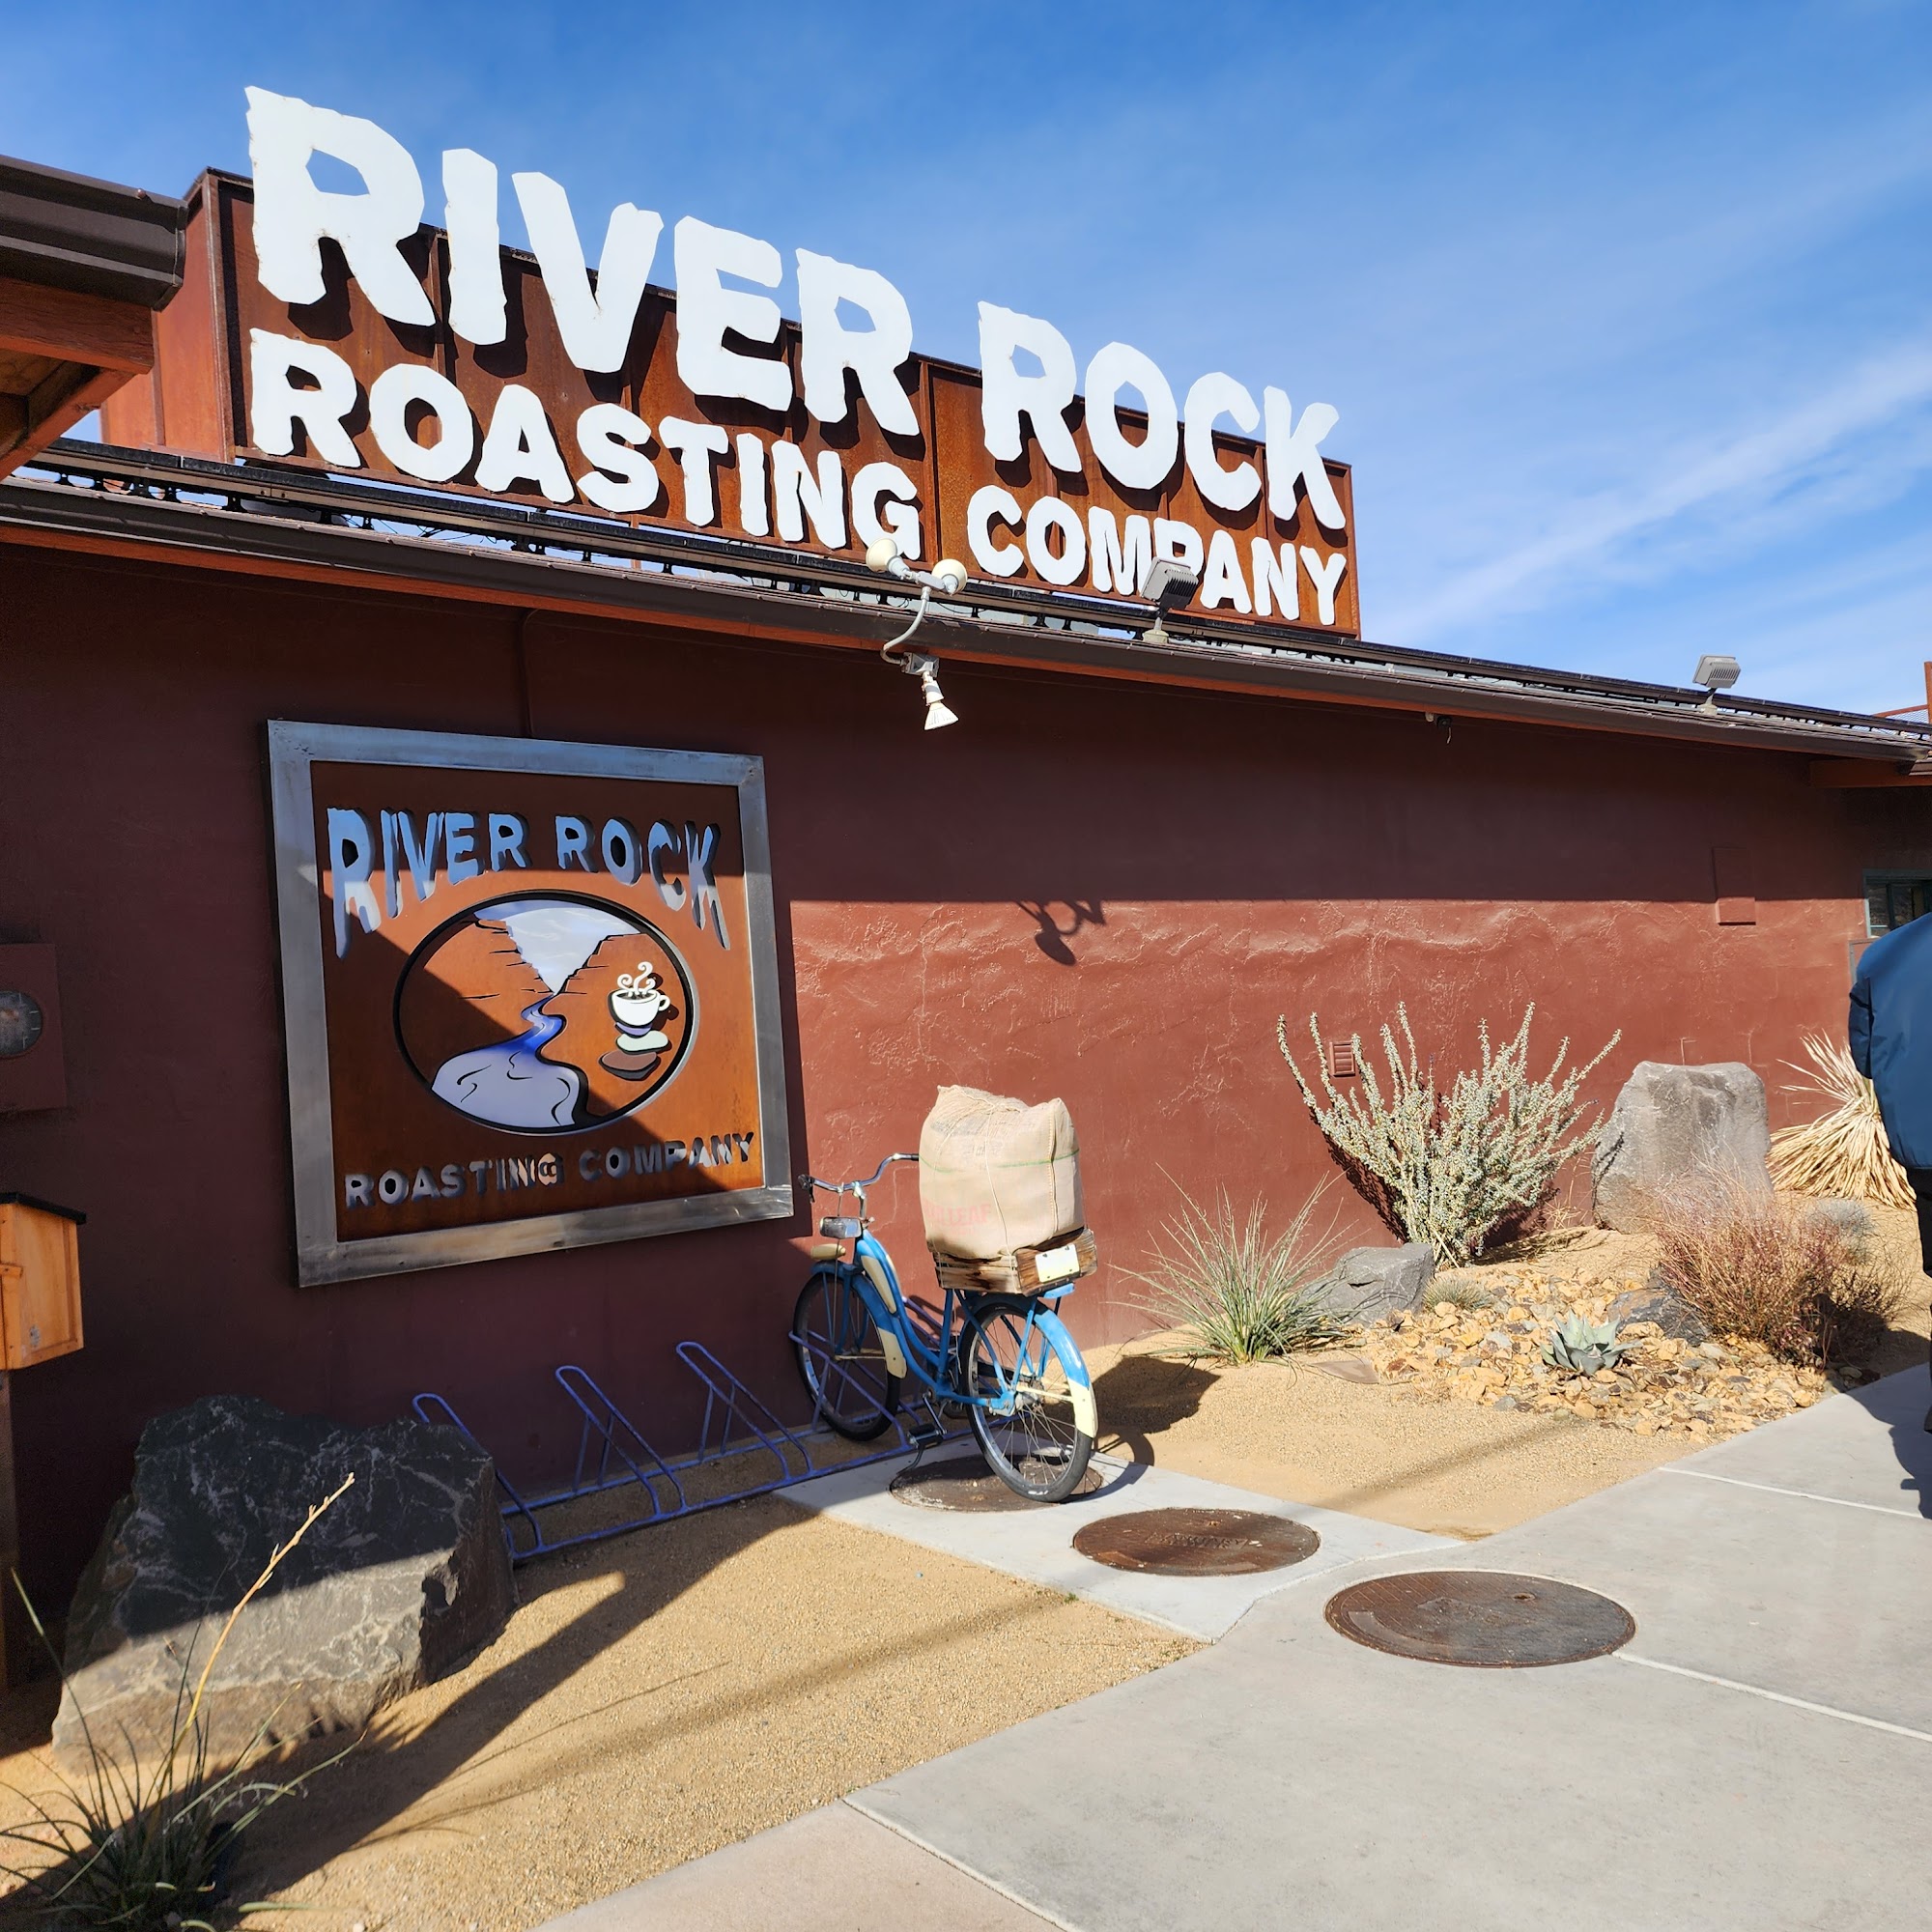 River Rock Roasting Company